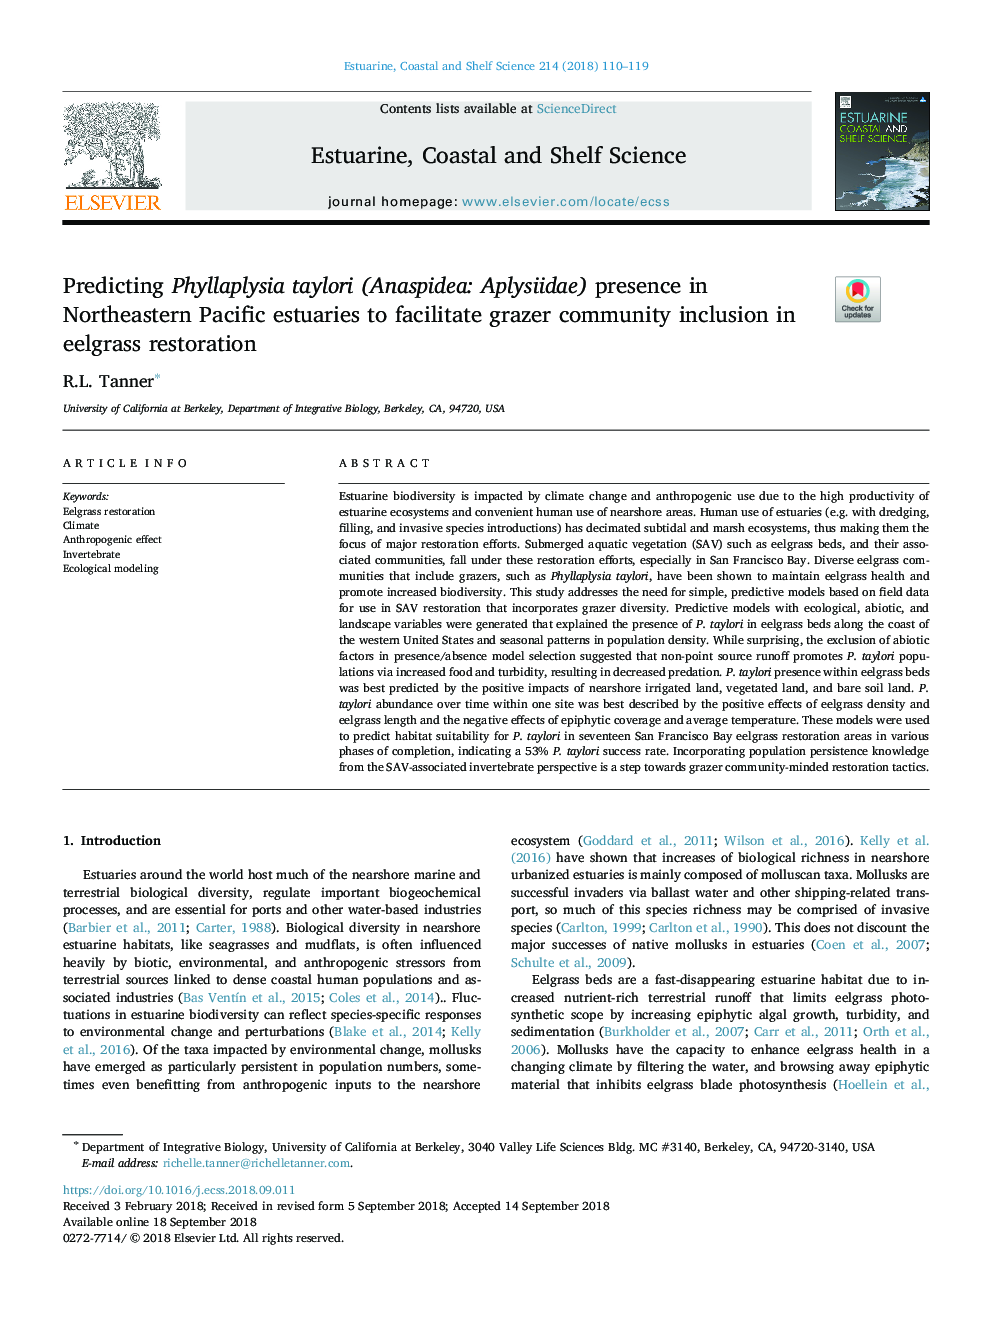 Predicting Phyllaplysia taylori (Anaspidea: Aplysiidae) presence in Northeastern Pacific estuaries to facilitate grazer community inclusion in eelgrass restoration